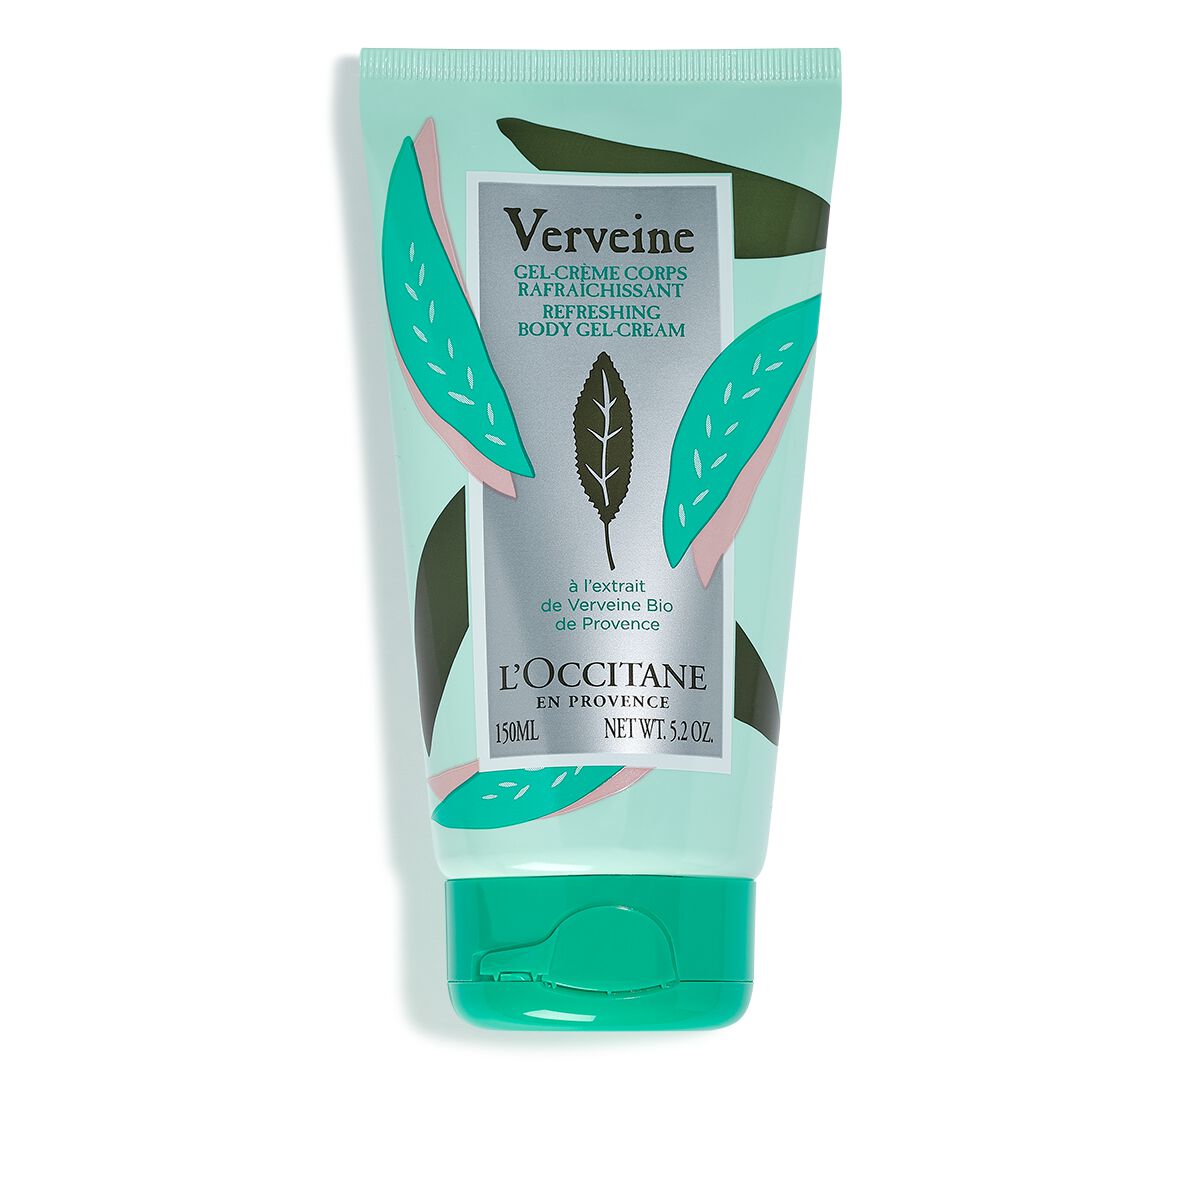 Verbena Verfrissende Body Gel-Crème - Limited Edition 2021 - 150 - L'Occitane en Provence